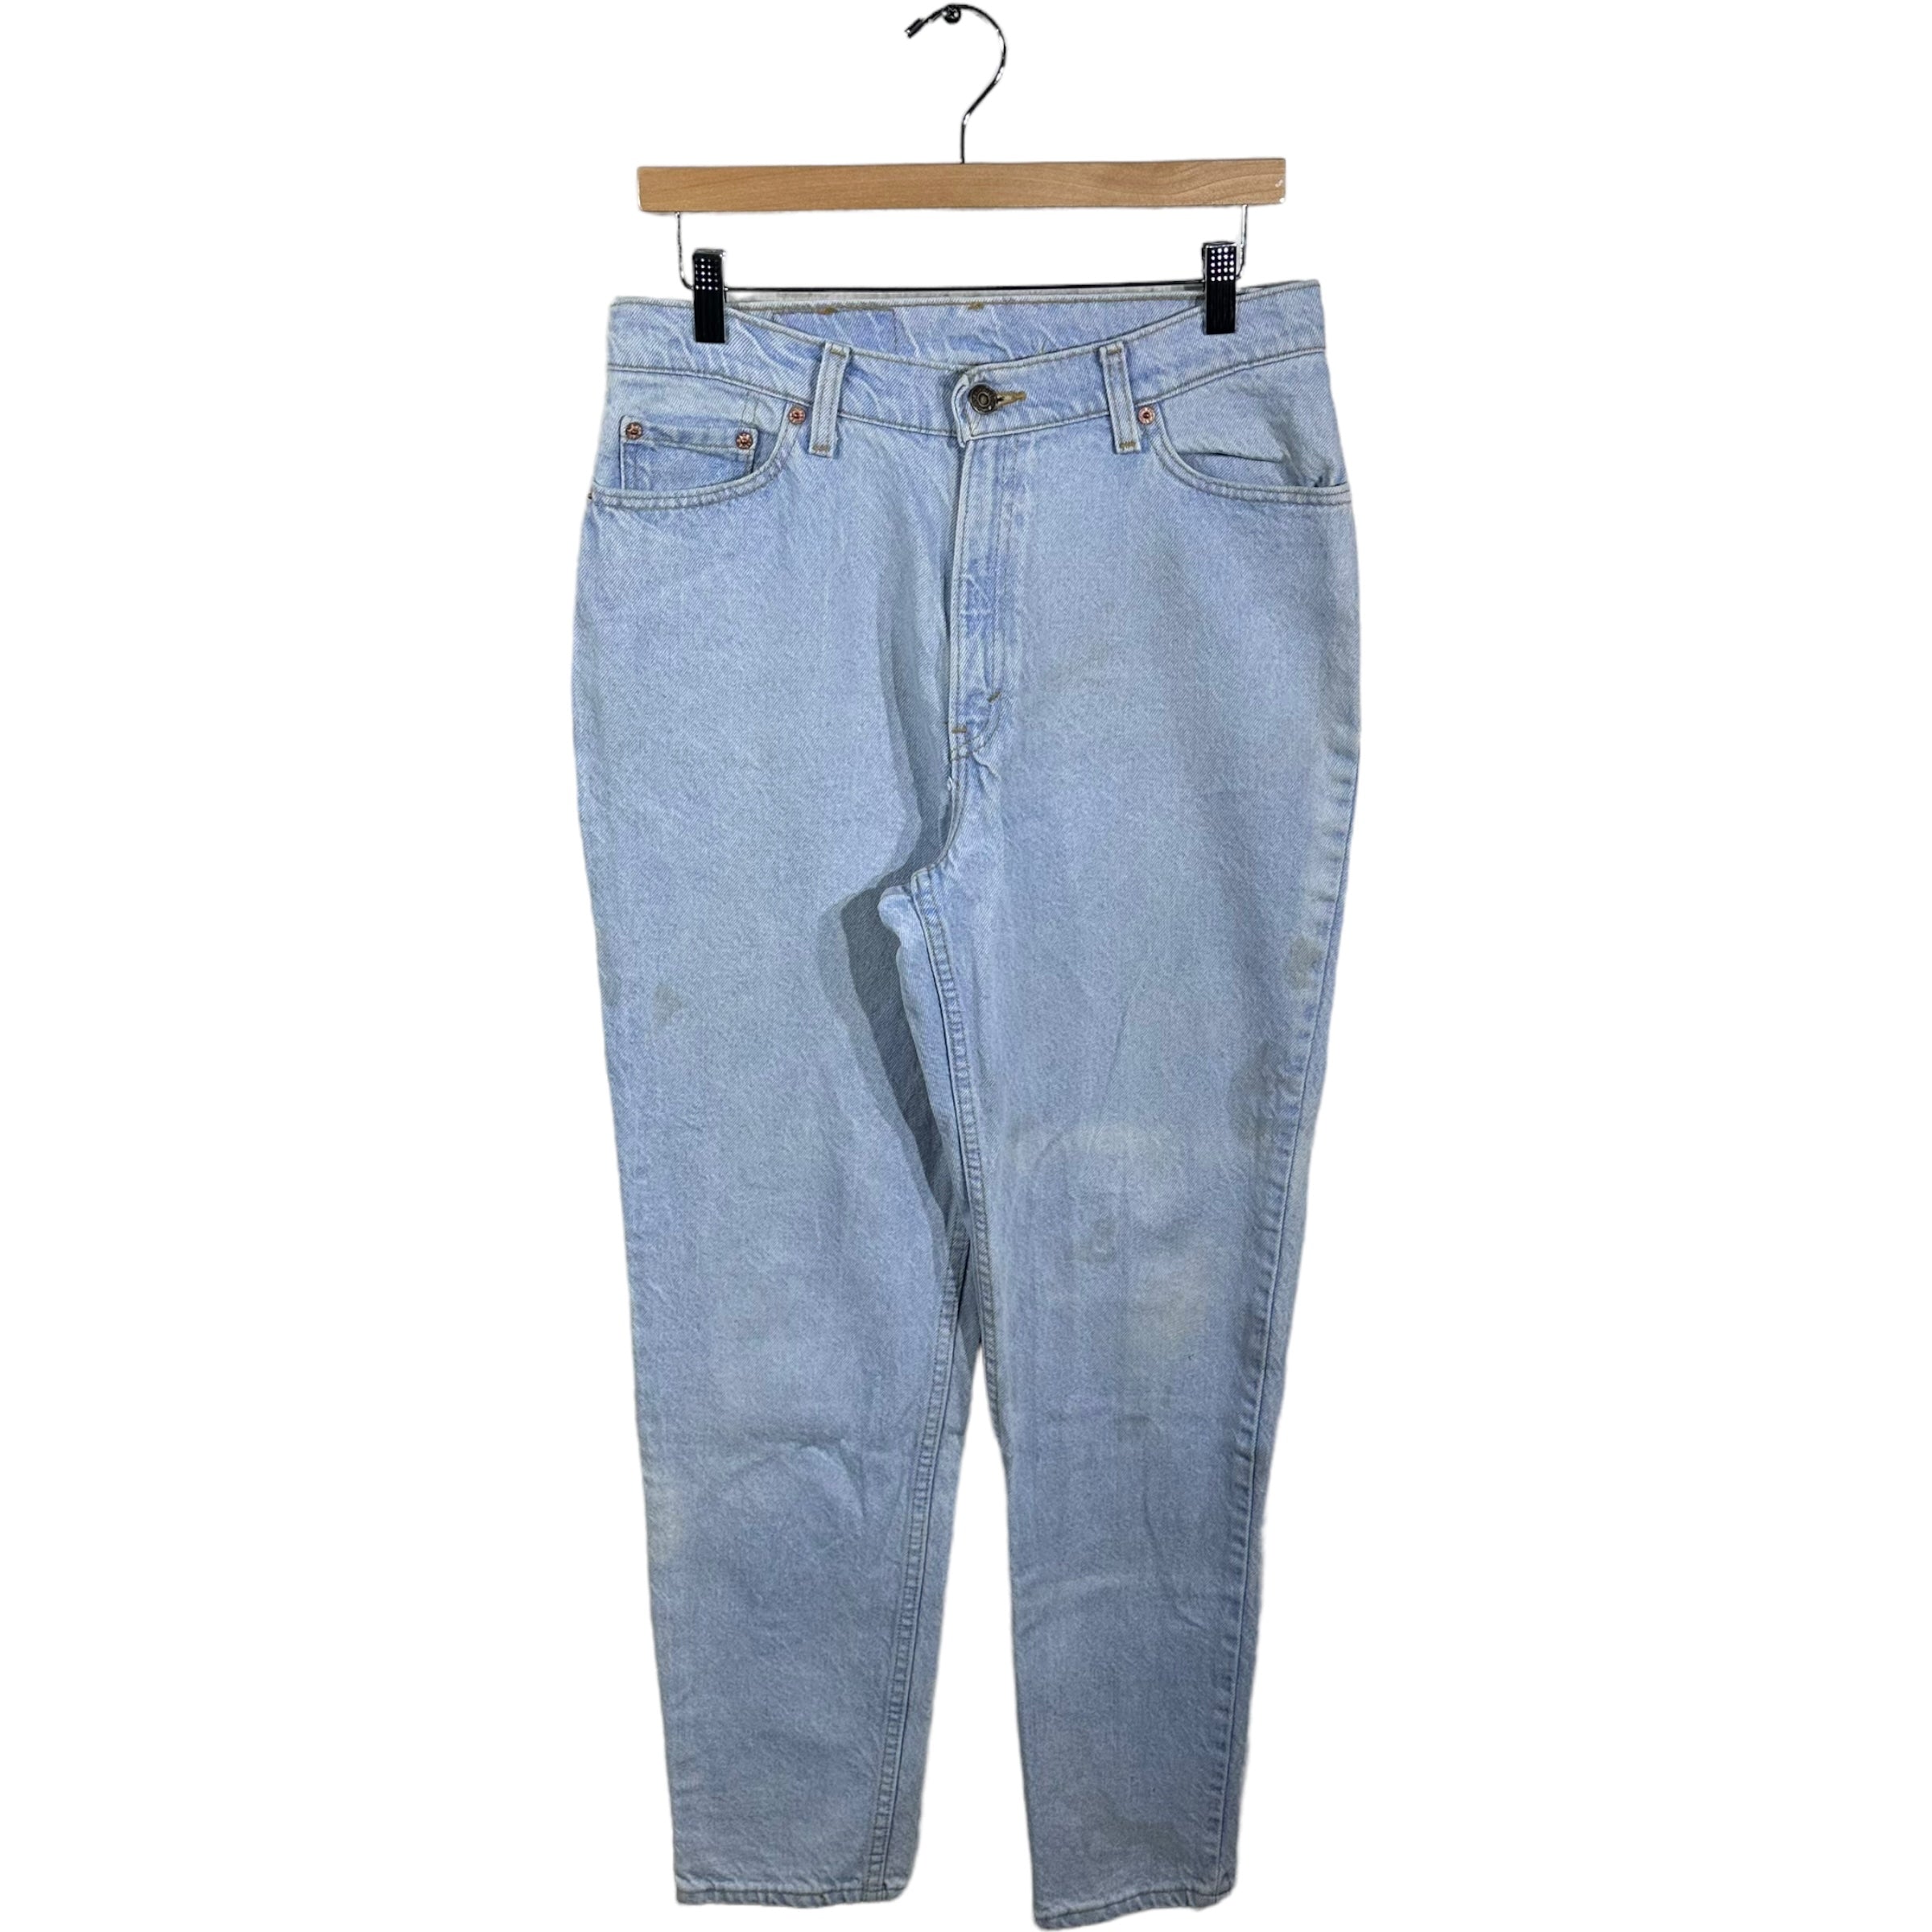 Vintage Levi's Skinny Jeans